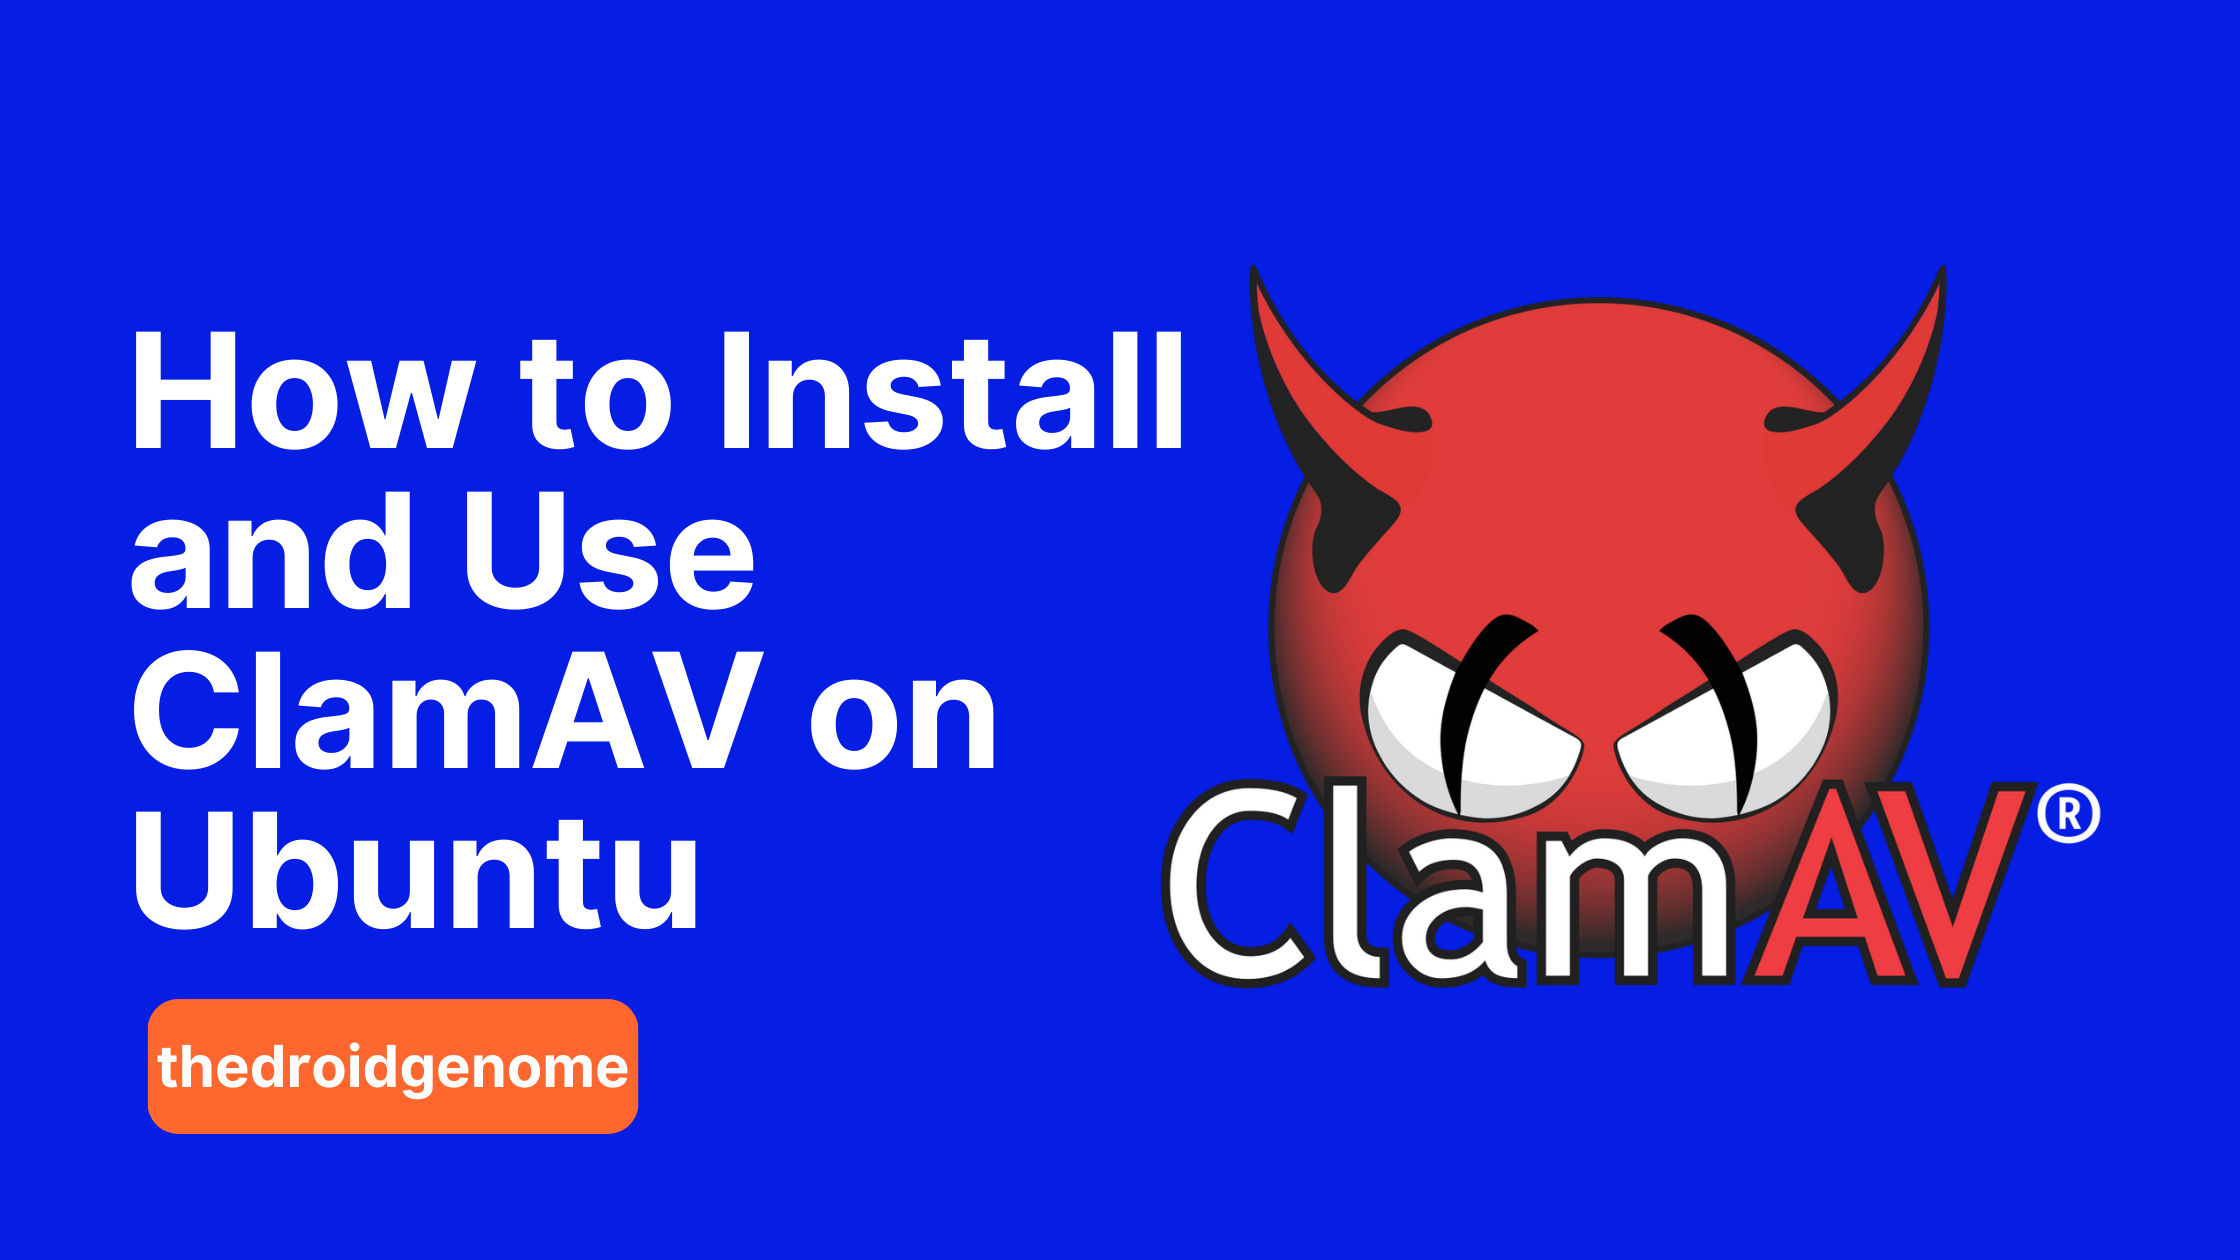 How to Install and Use ClamAV on Ubuntu